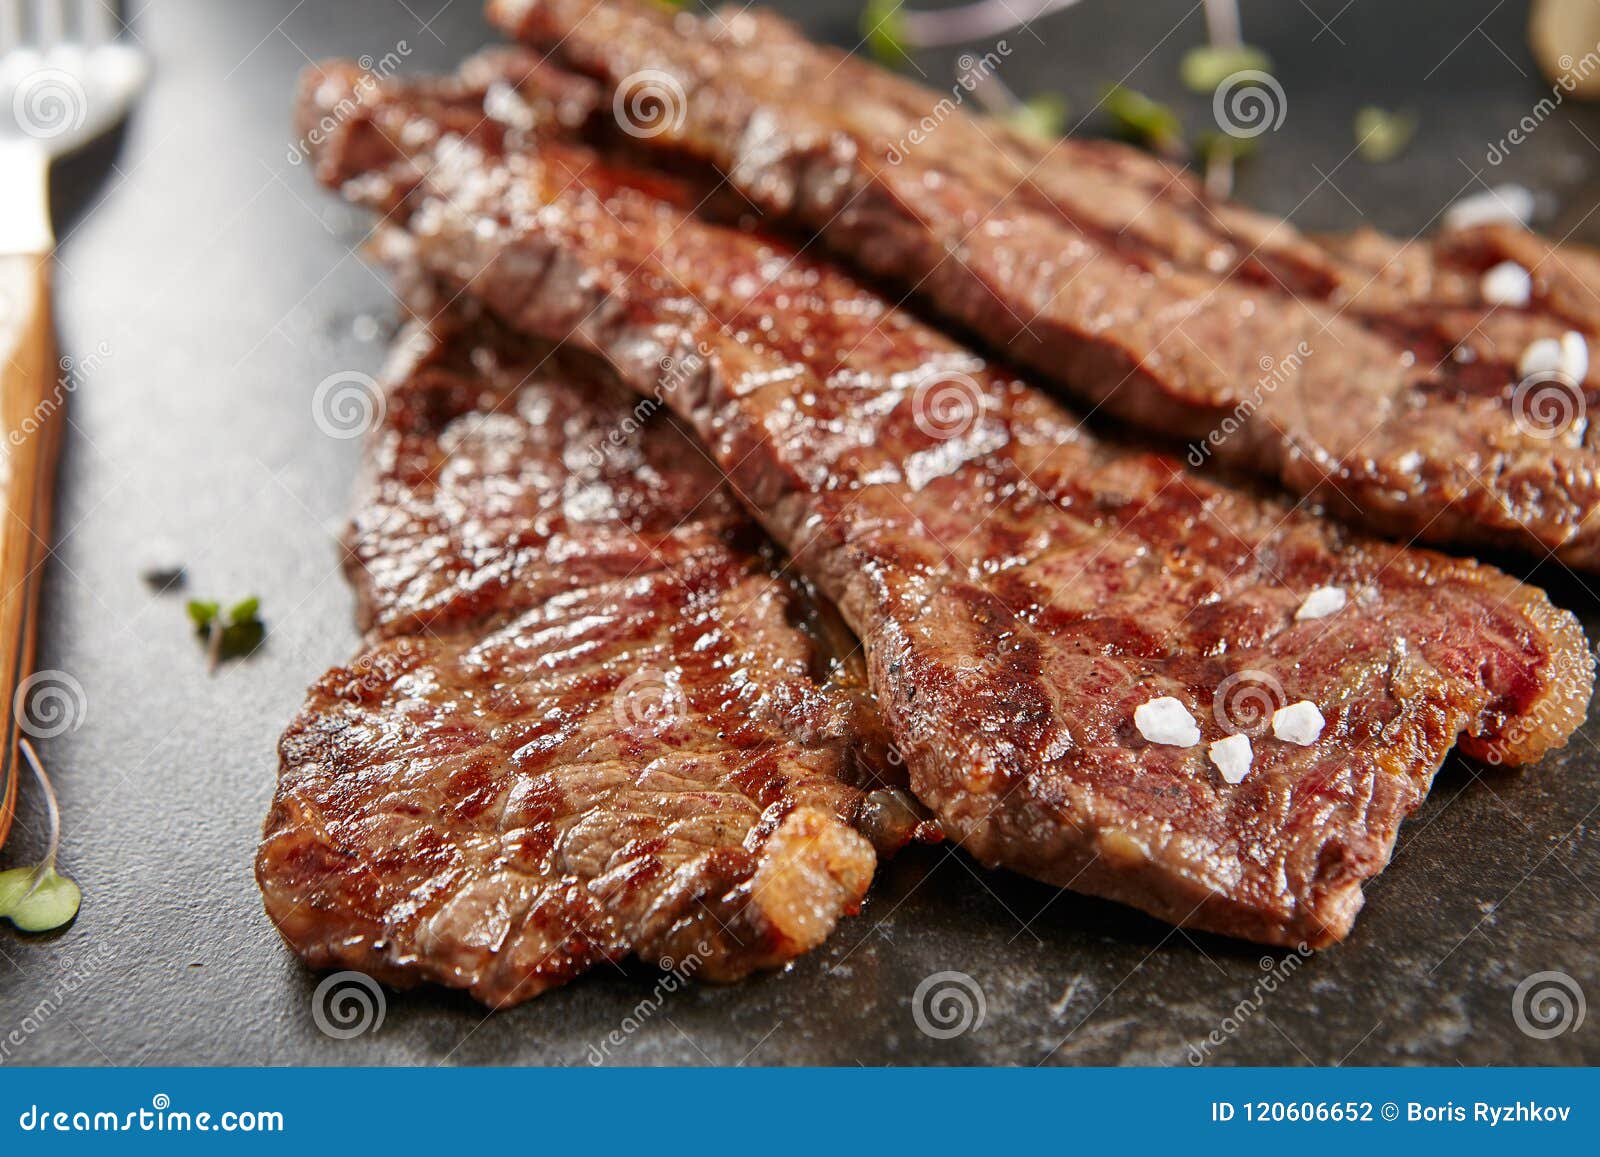 hot grilled whole gaucho steak